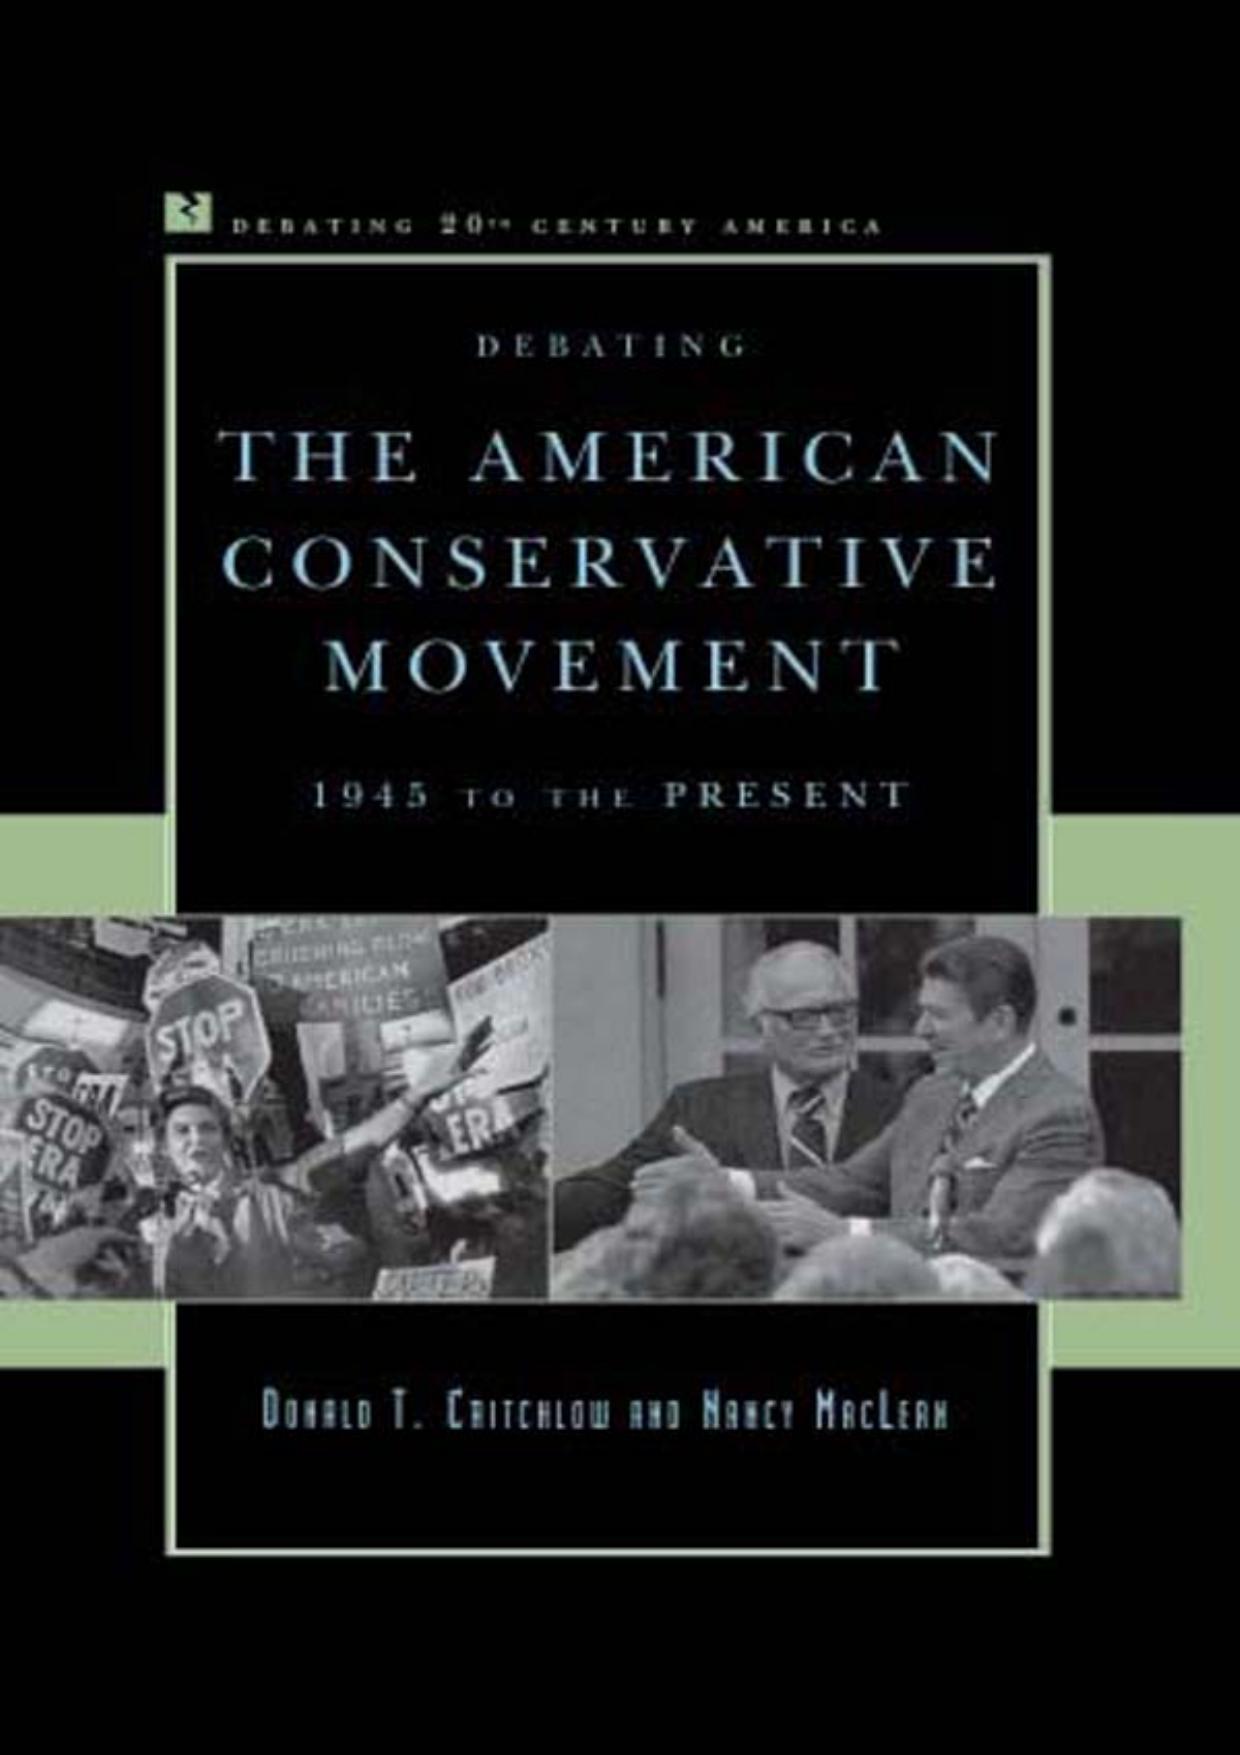 Debating the American Conservative Movement (Debating Twentieth-Century America) - Donald T. Critchlow & Nancy MacLean.jpg